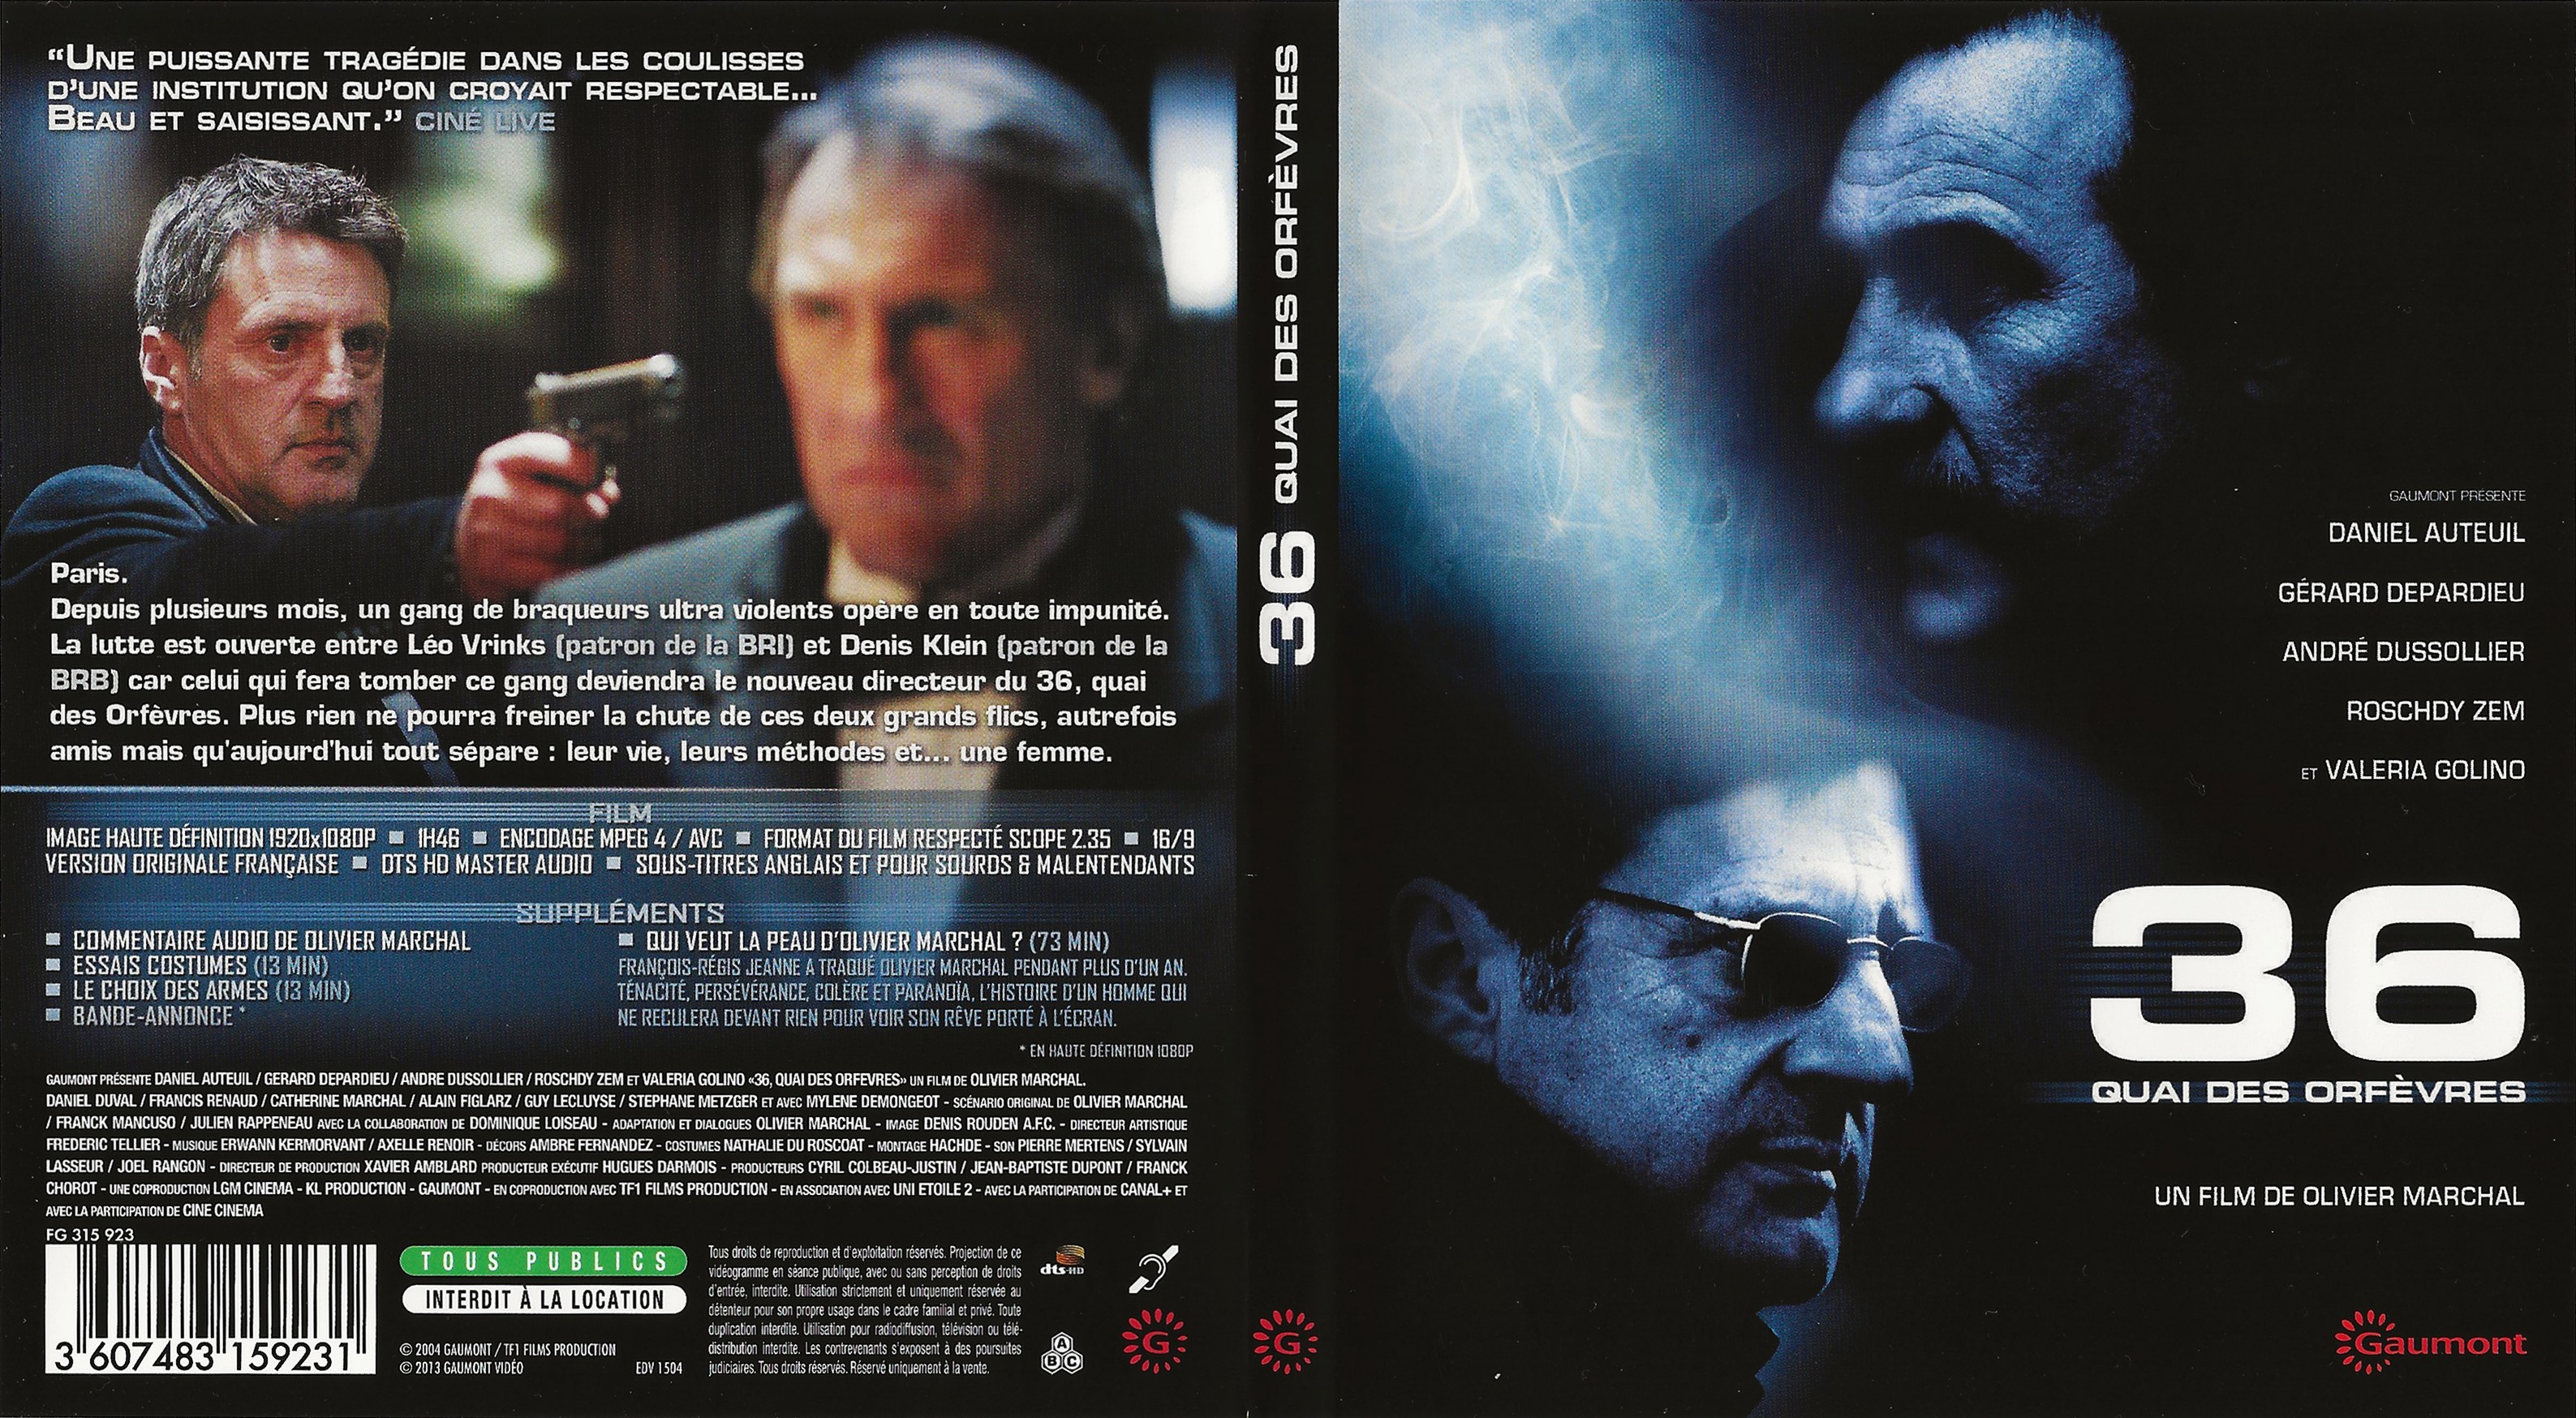 Jaquette DVD 36 quai des orfvres (BLU-RAY) v2